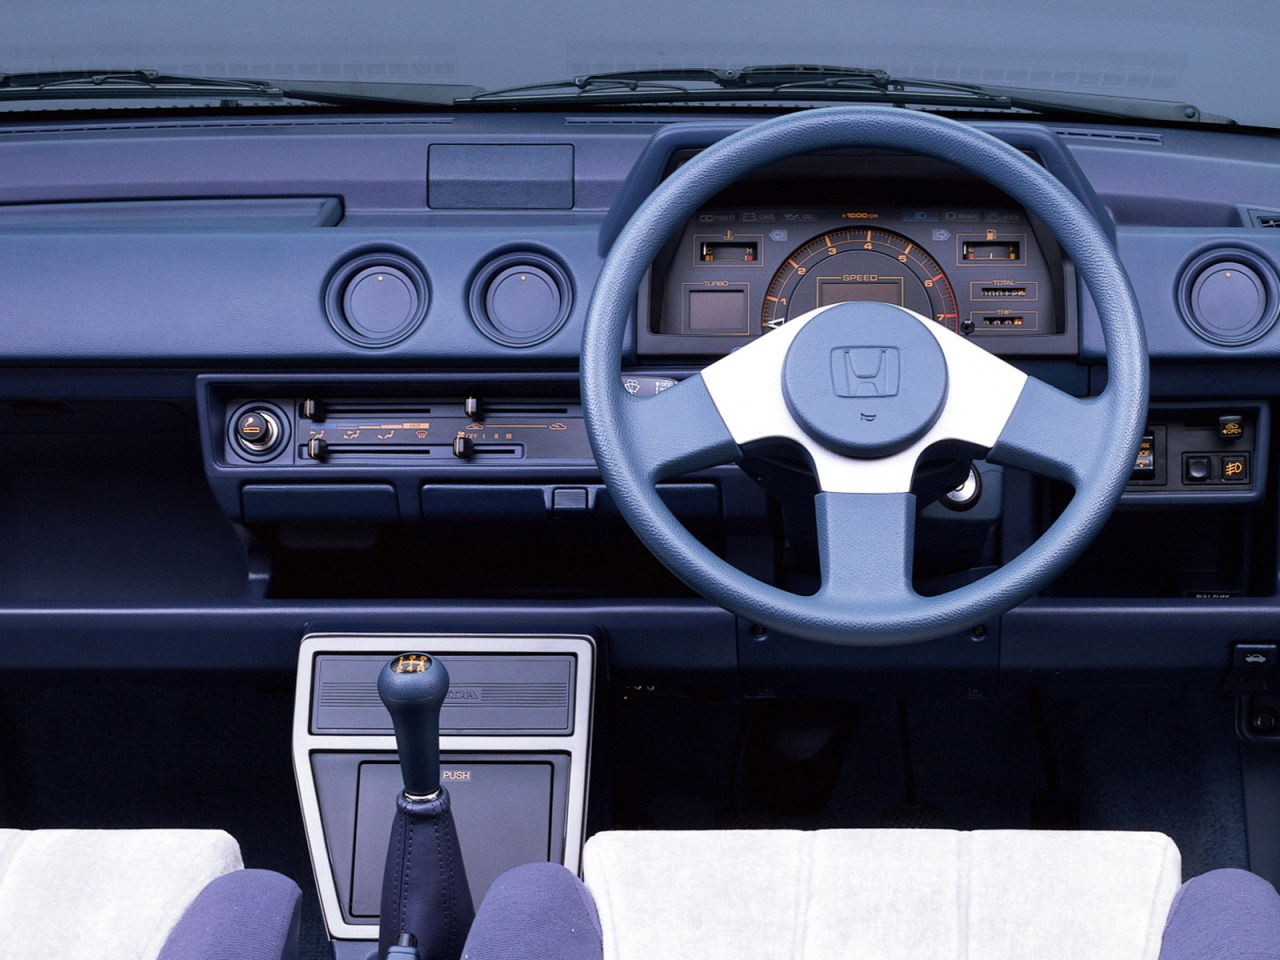 carinteriors:
“ 1983 Honda City Turbo
”